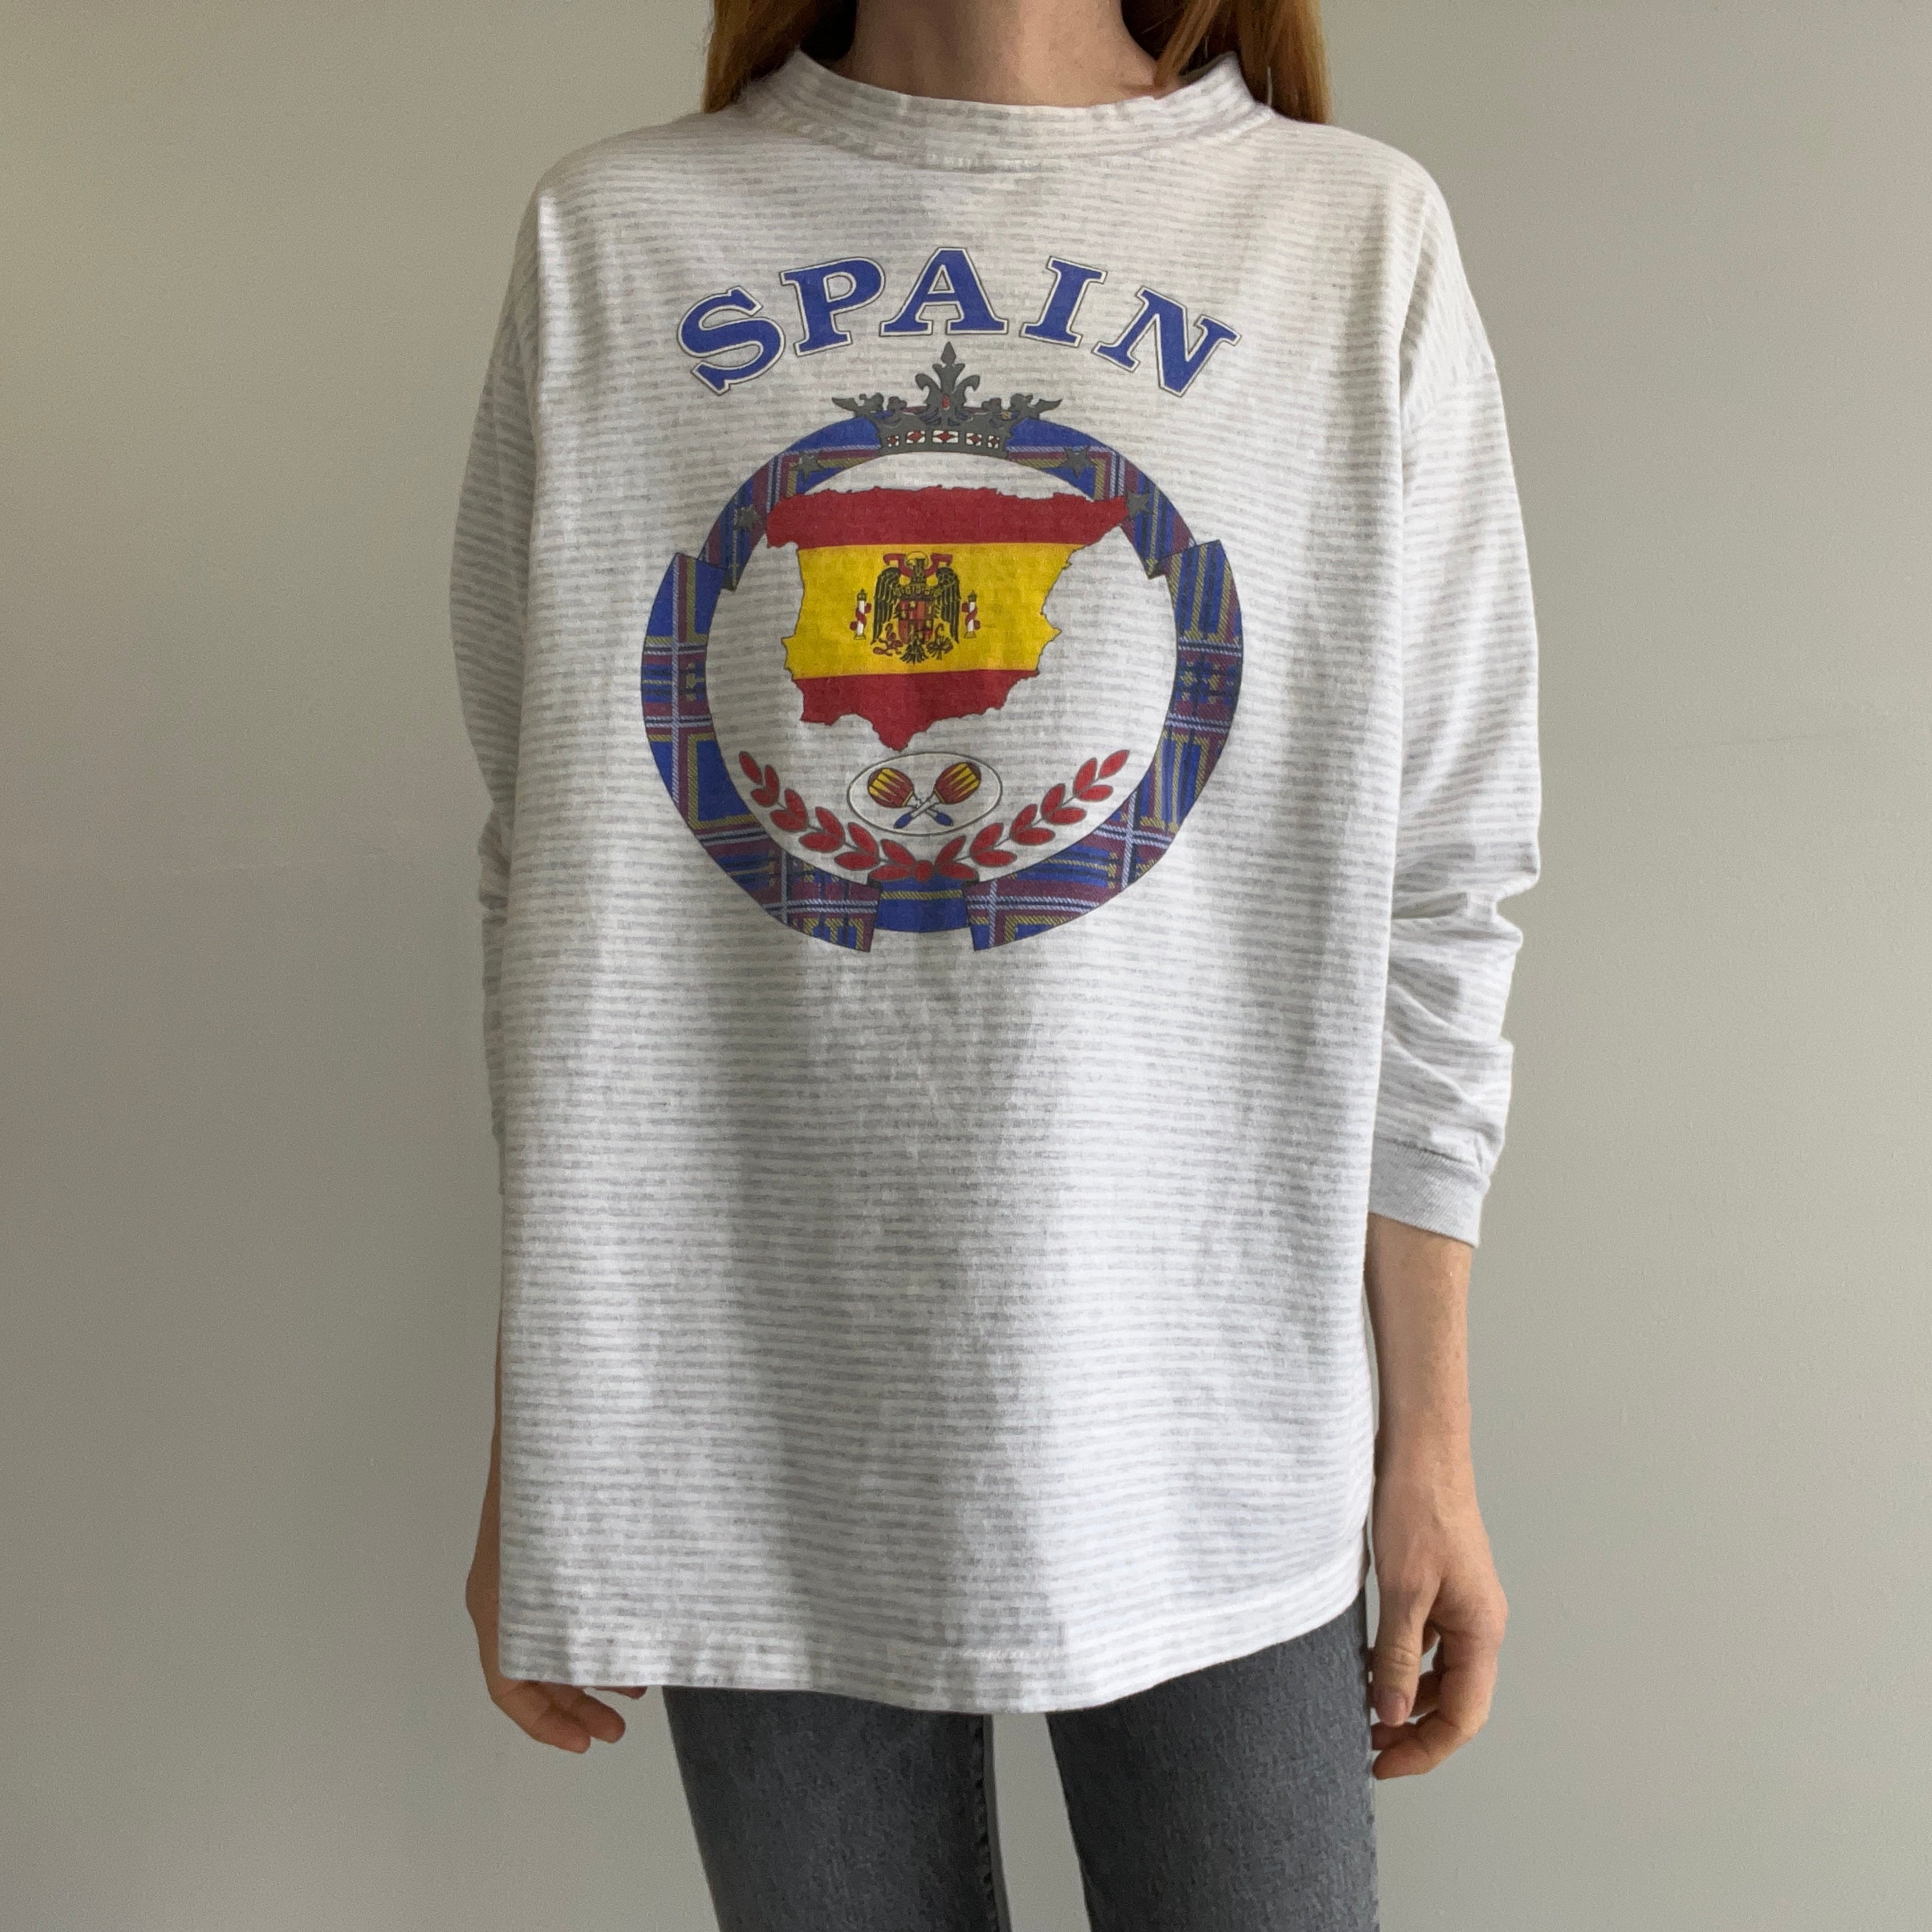 1990s Spain Cotton Striped Long Sleeve T-Shirt